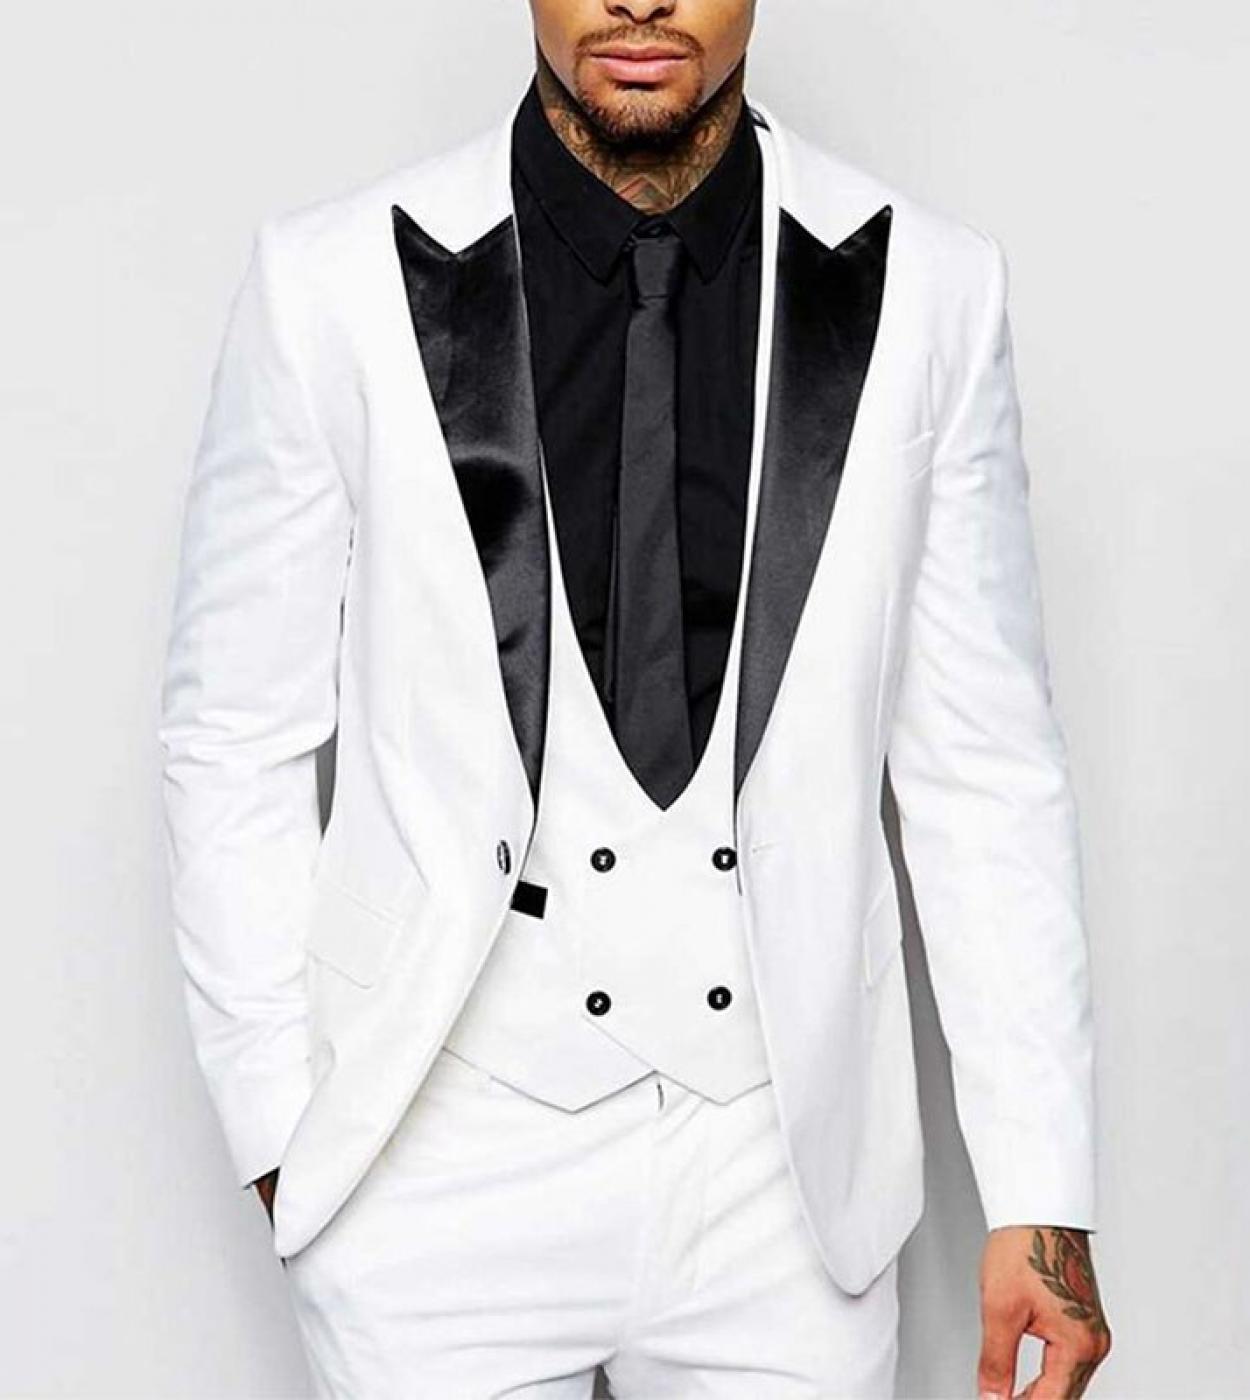  New Arrival White Groom Tuxedos Peak Lapel Groomsmen Best Man Suit Men Wedding Suits Prom Party Suit jacketpantsvest